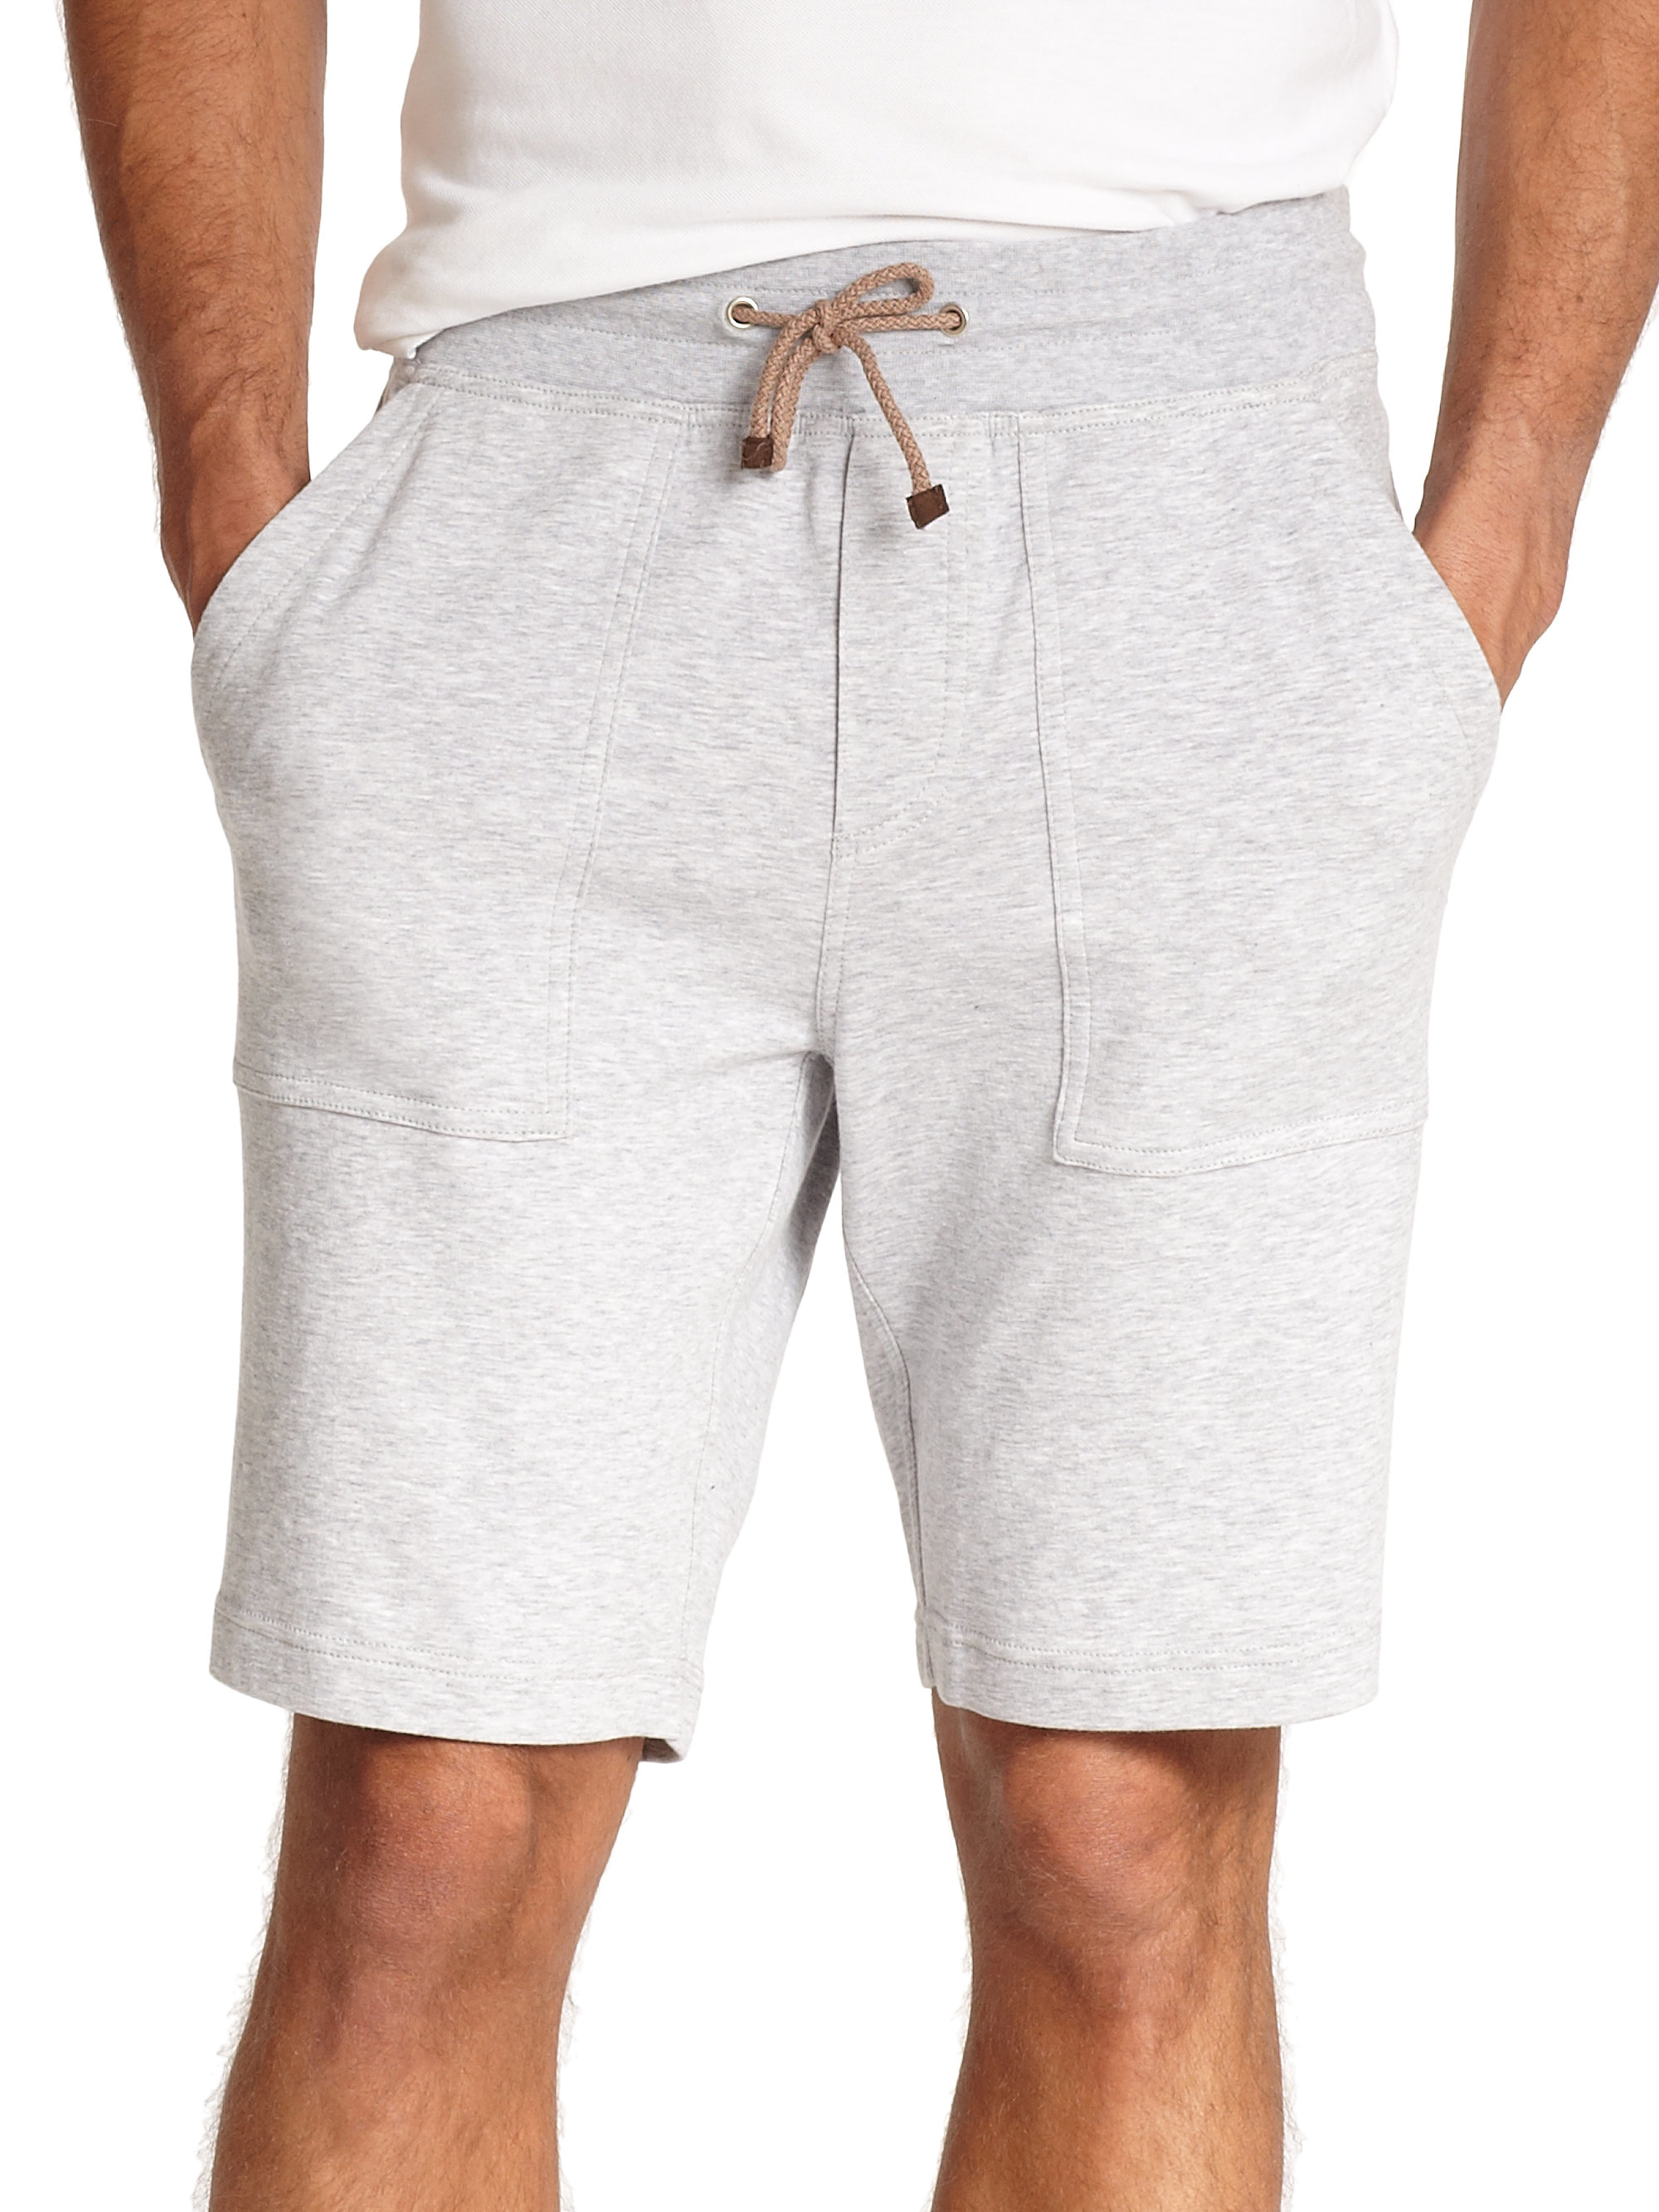 Lyst - Brunello Cucinelli Sweat Shorts in Gray for Men